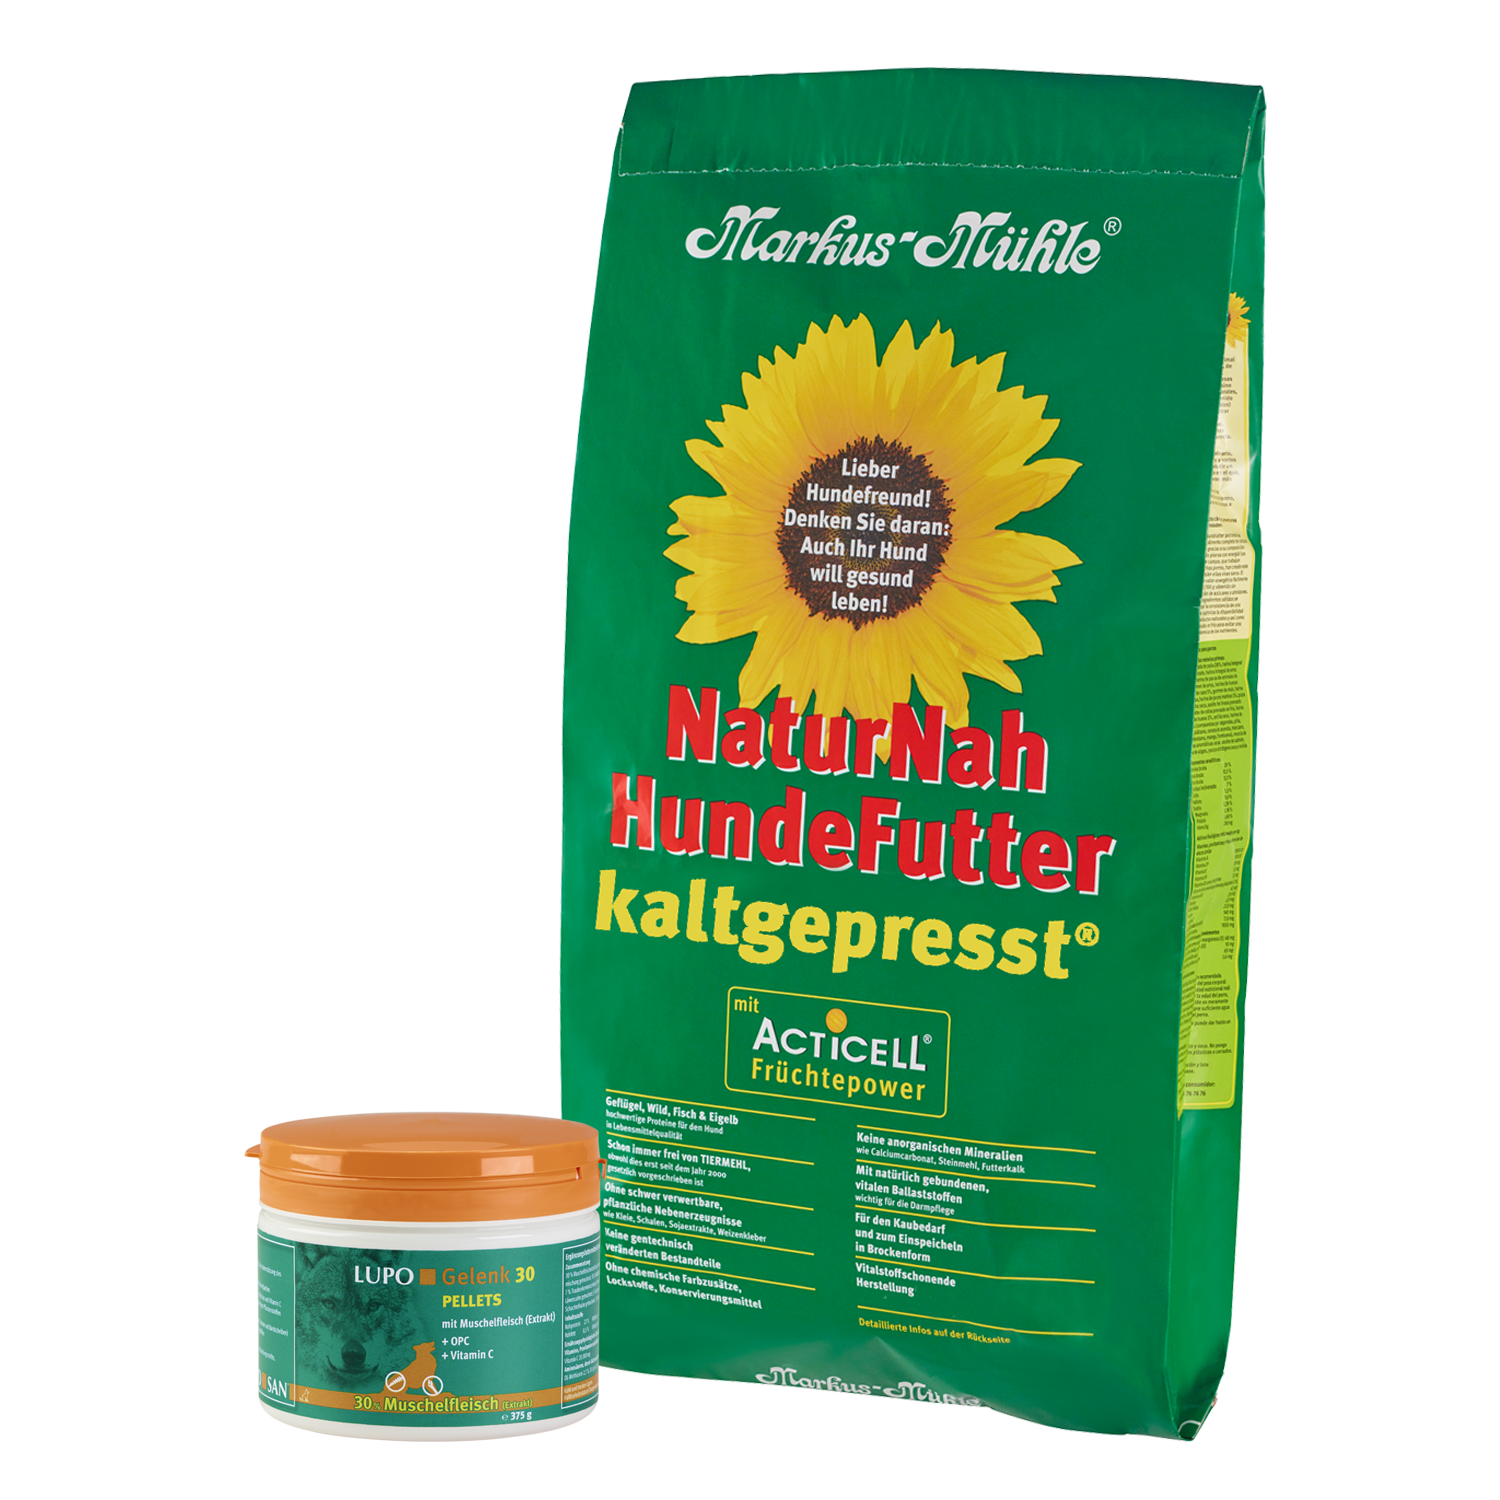 Bestseller-Paket Markus-Mühle NaturNah 15 kg + LUPO Gelenk 30 375 g